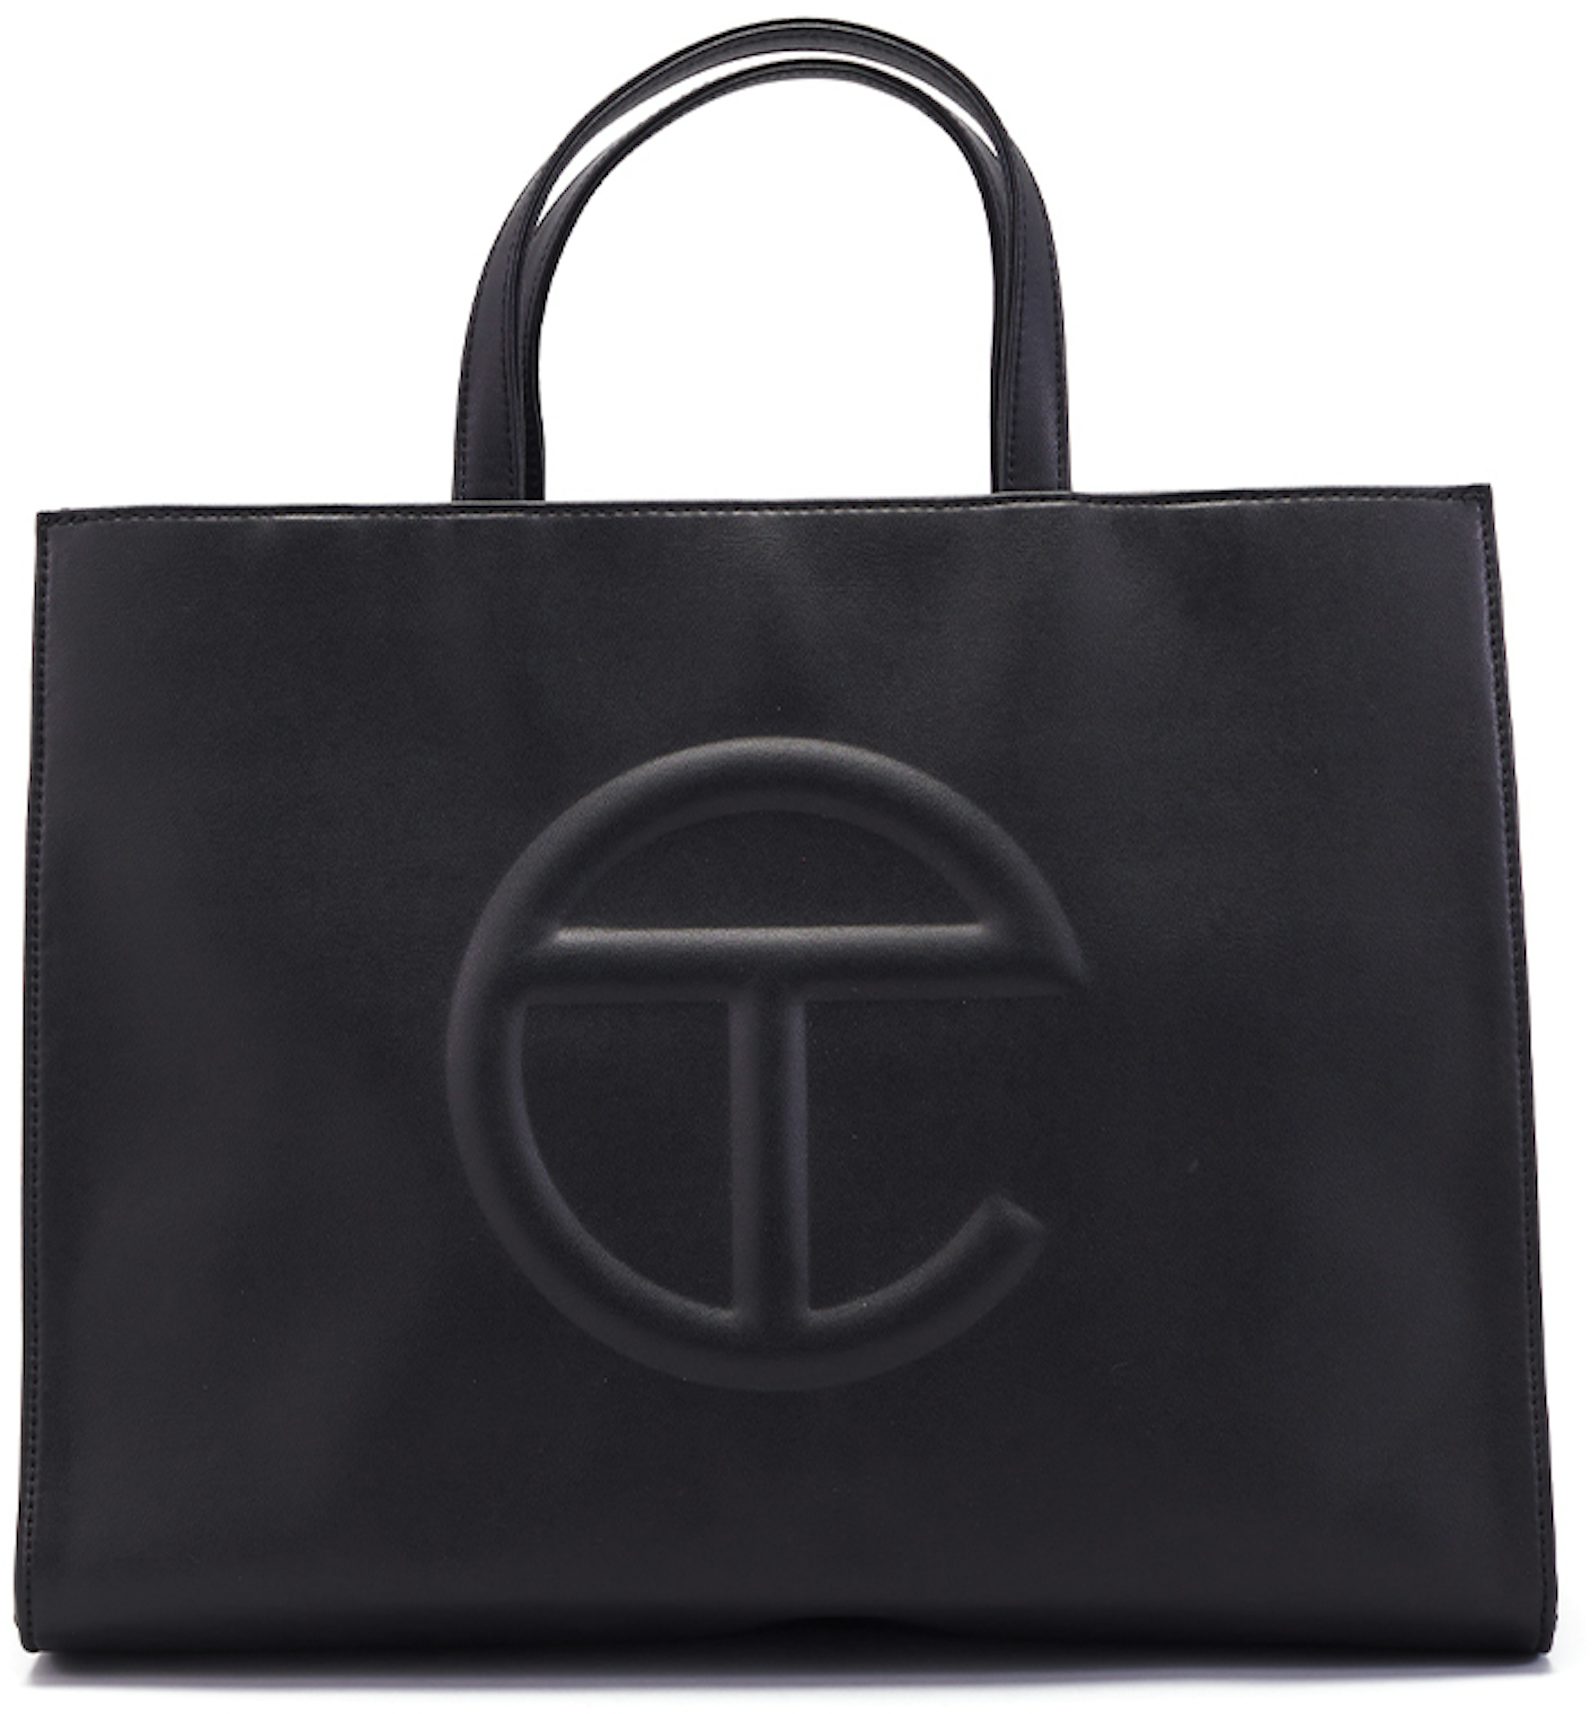 Telfar Medium Shopping Bag Black PRICE FIRM TRUSTED